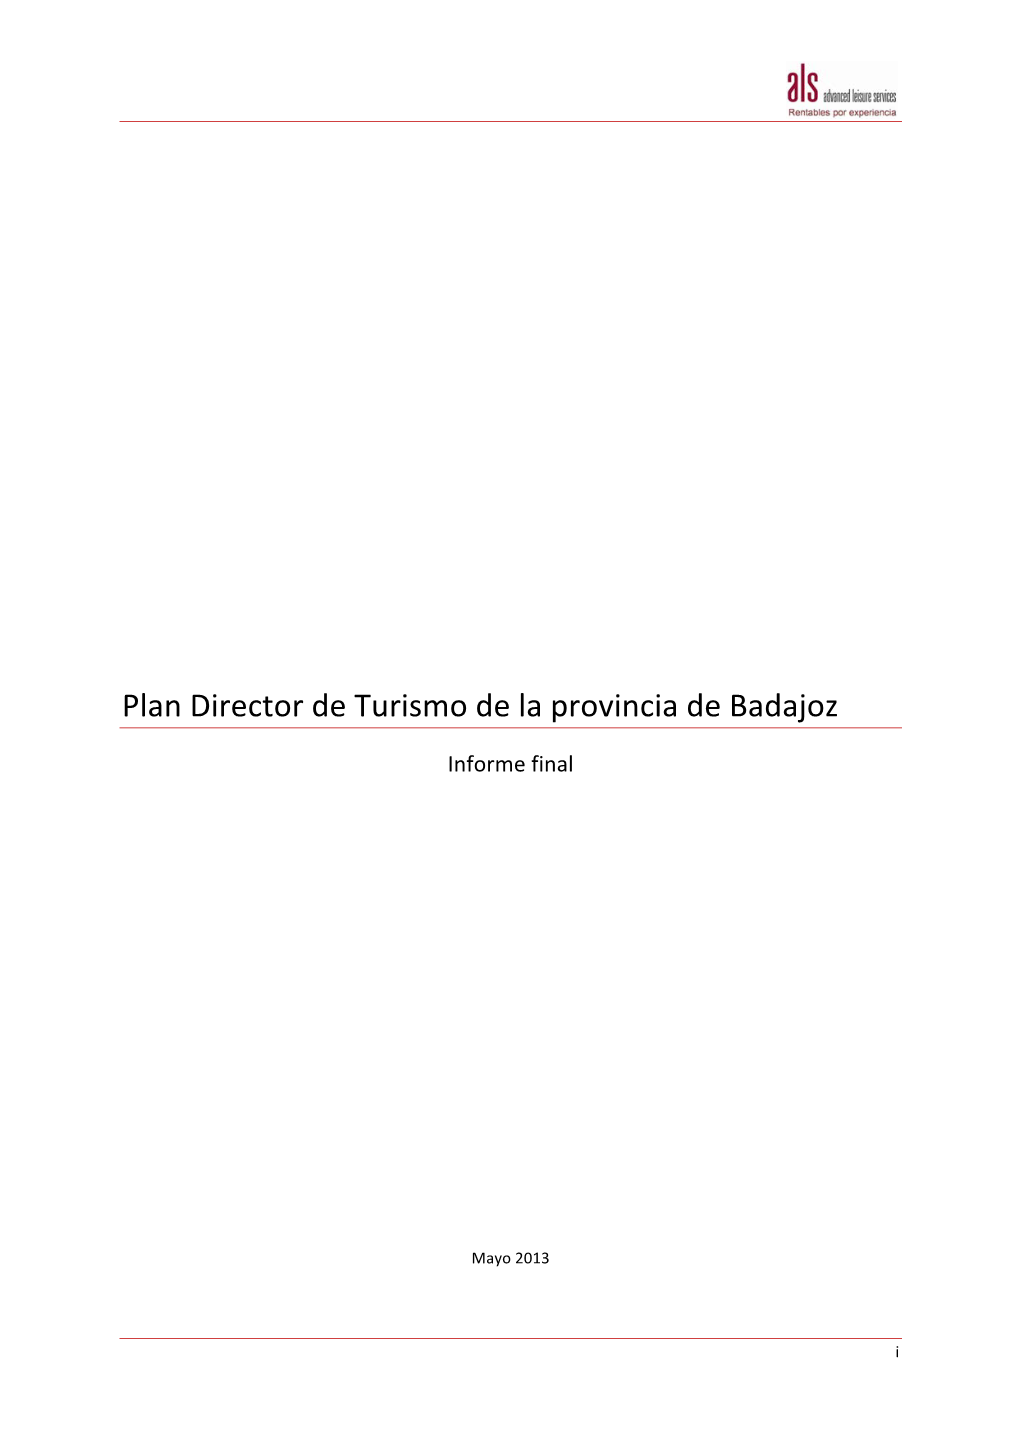 Plan Director De Turismo De La Provincia De Badajoz